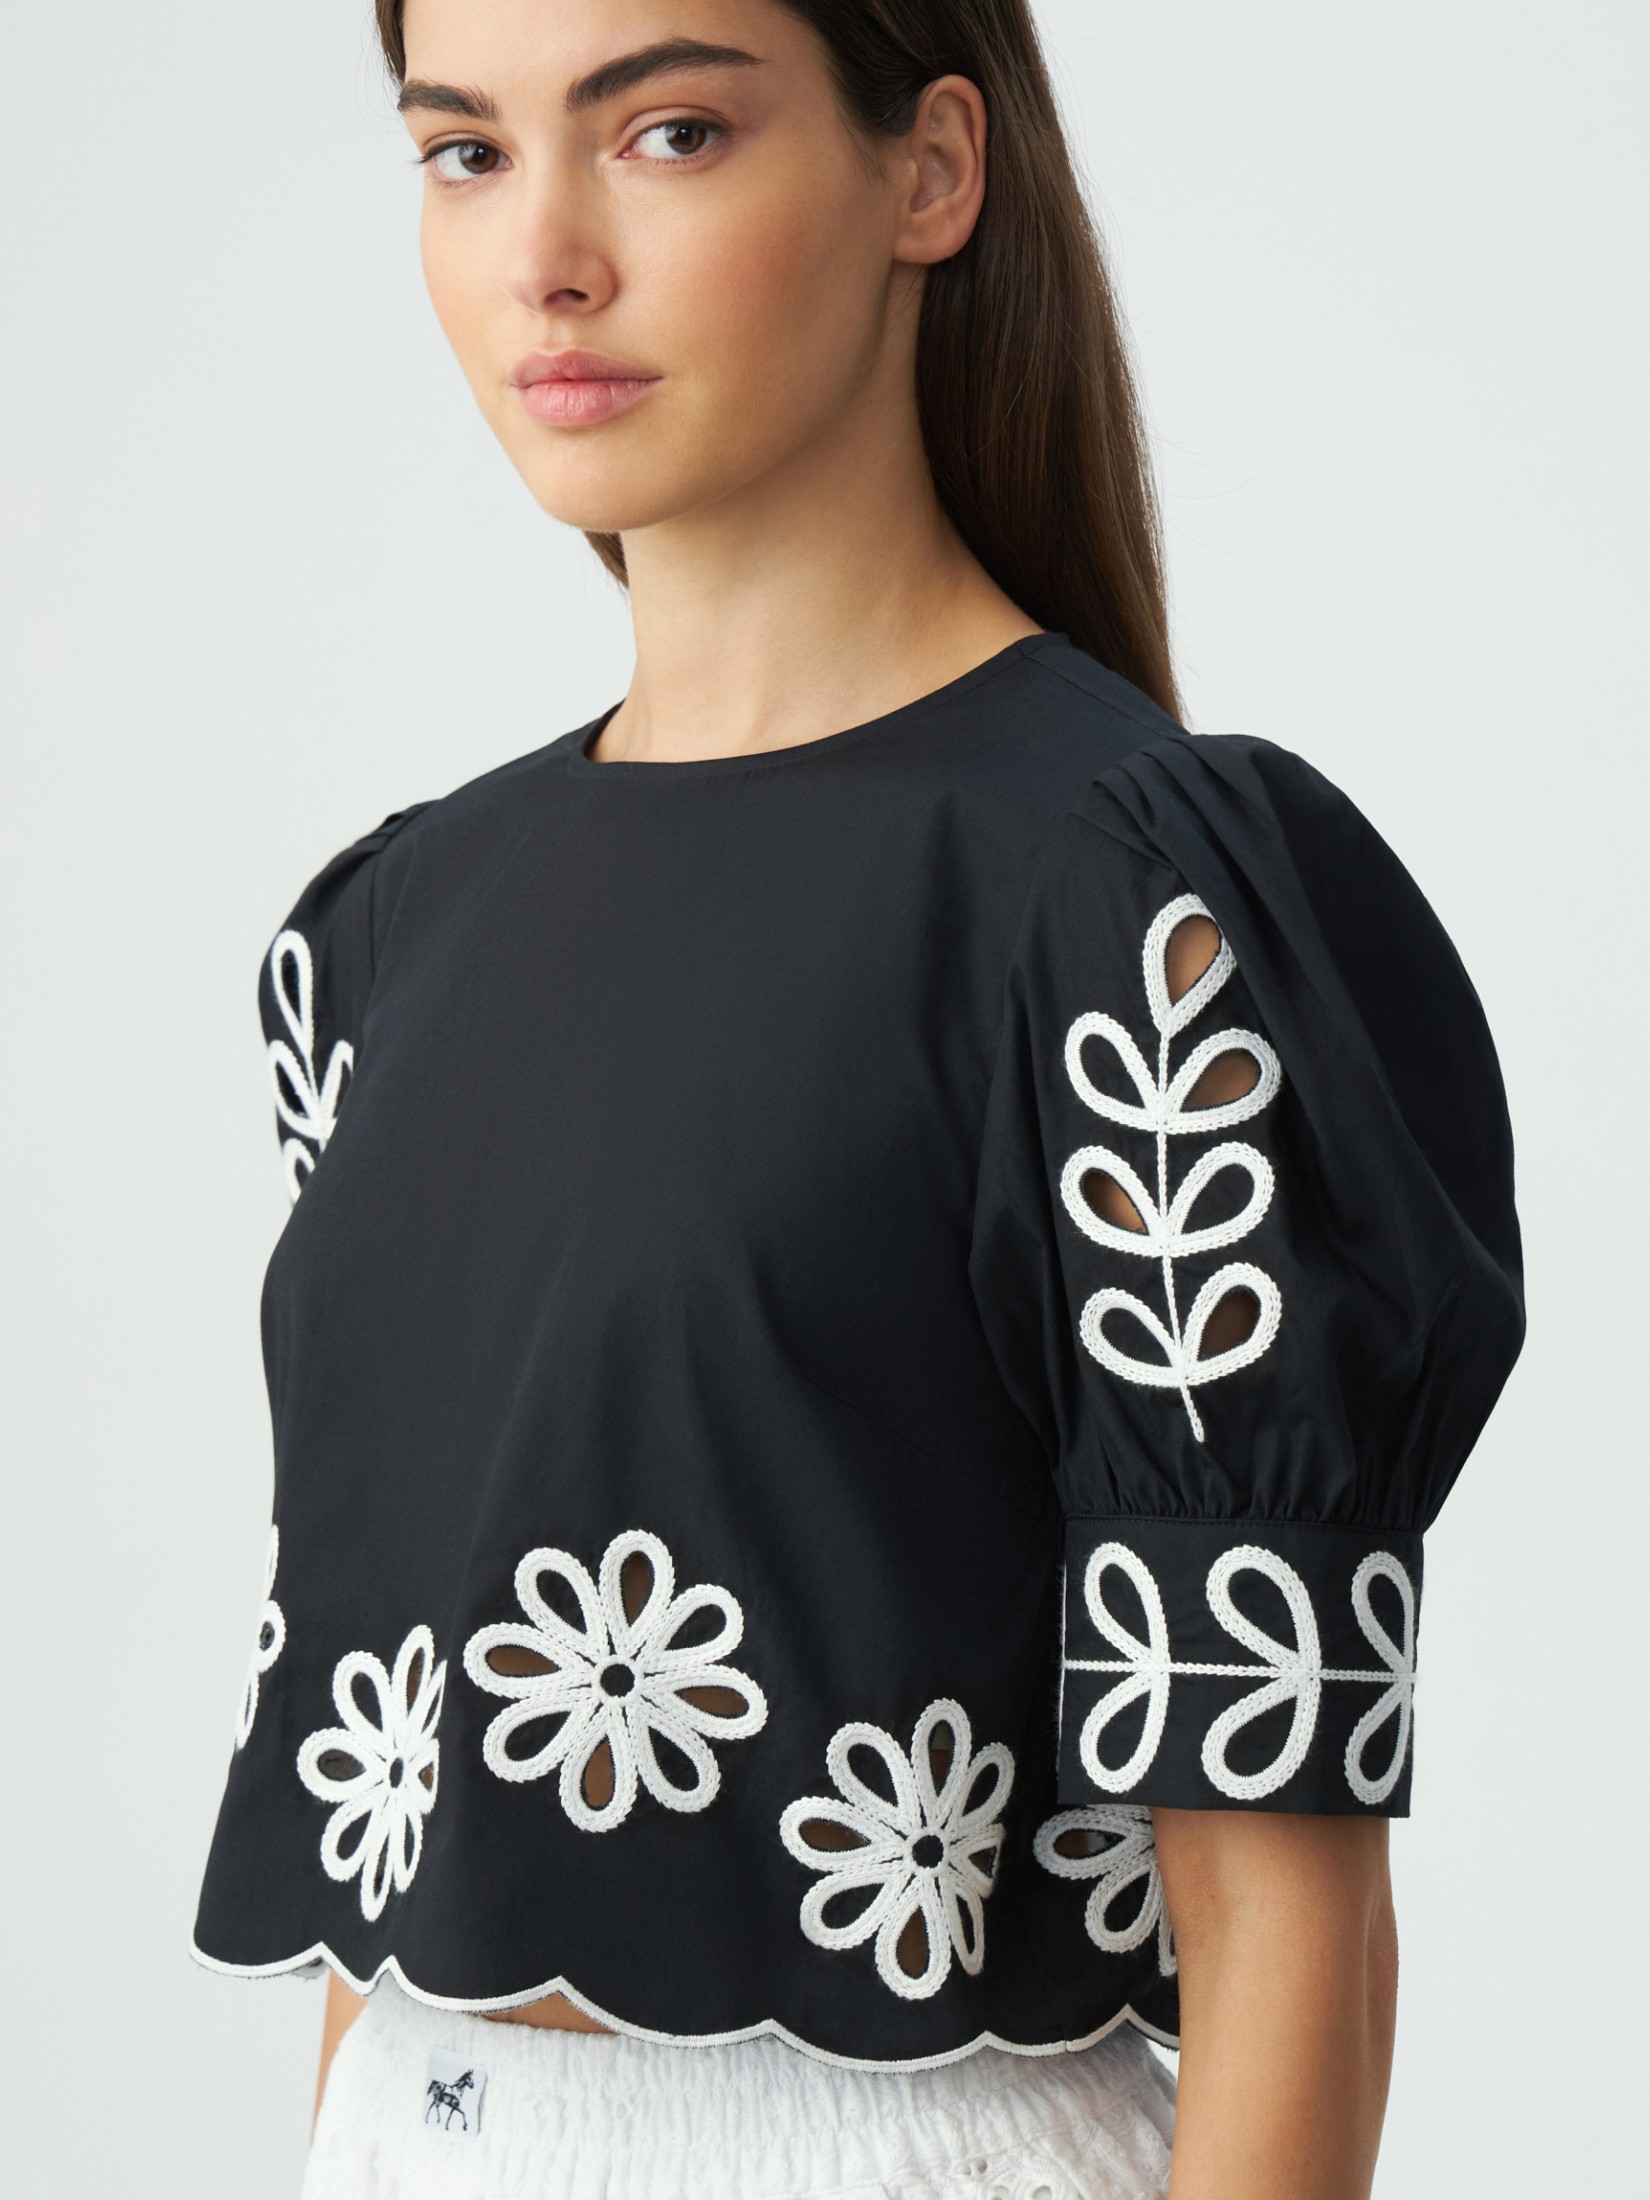 Блузка женская черная цена и фото